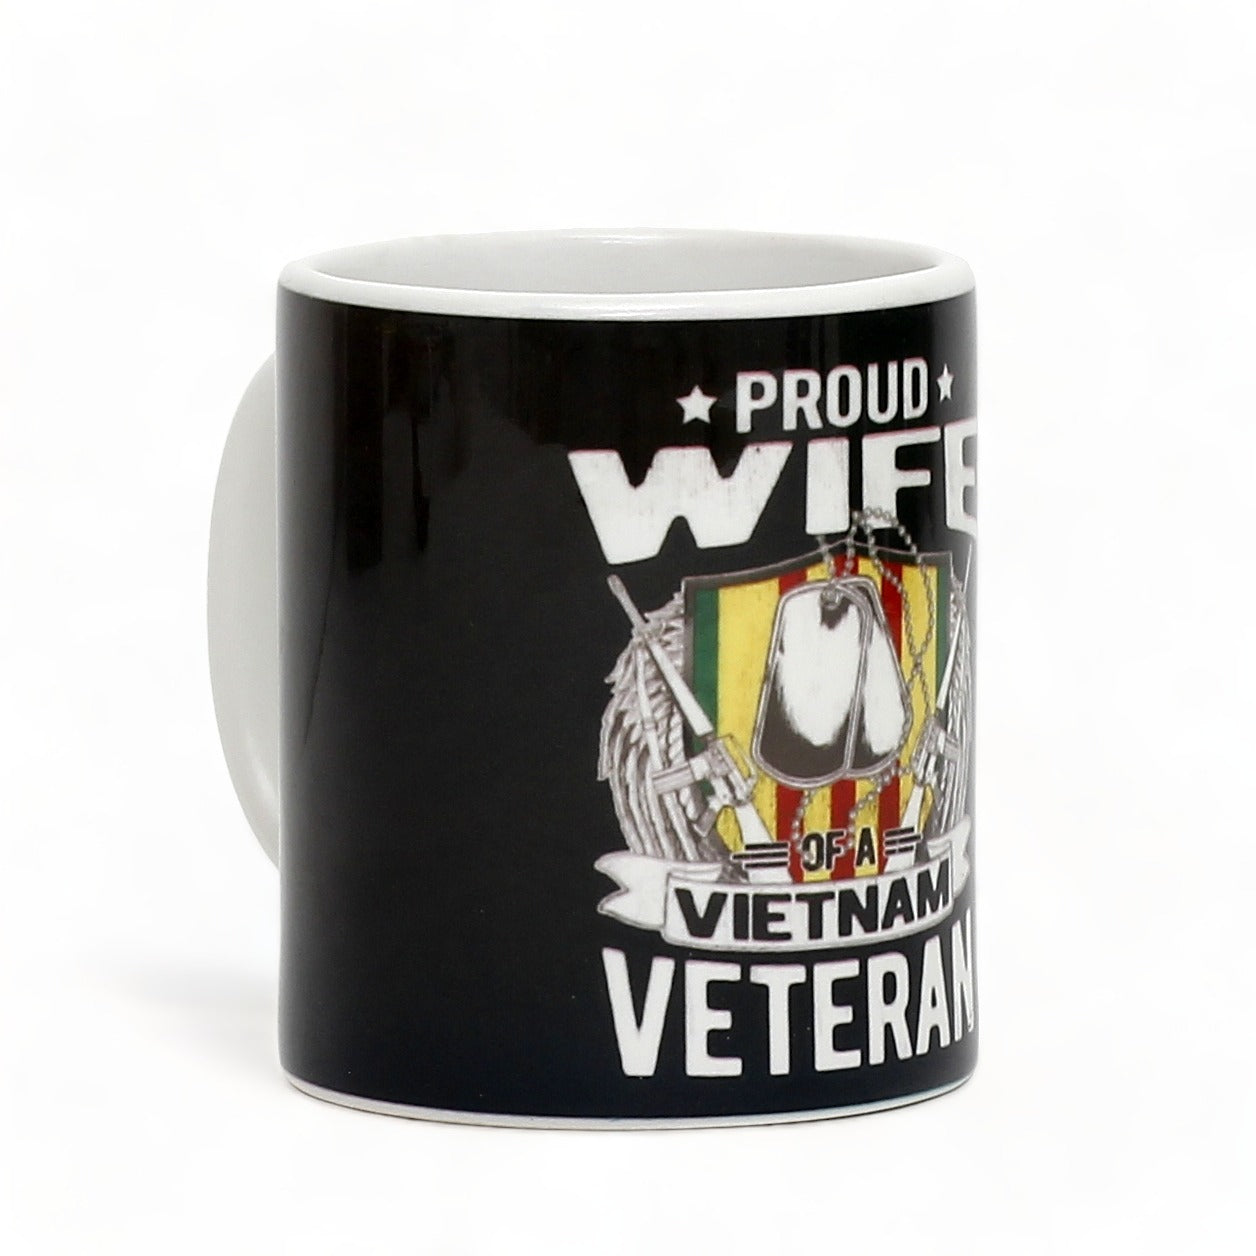 SUBLIMART: Veteran - Mug 'Proud Wife Vietnam Veteran' (Design #24)